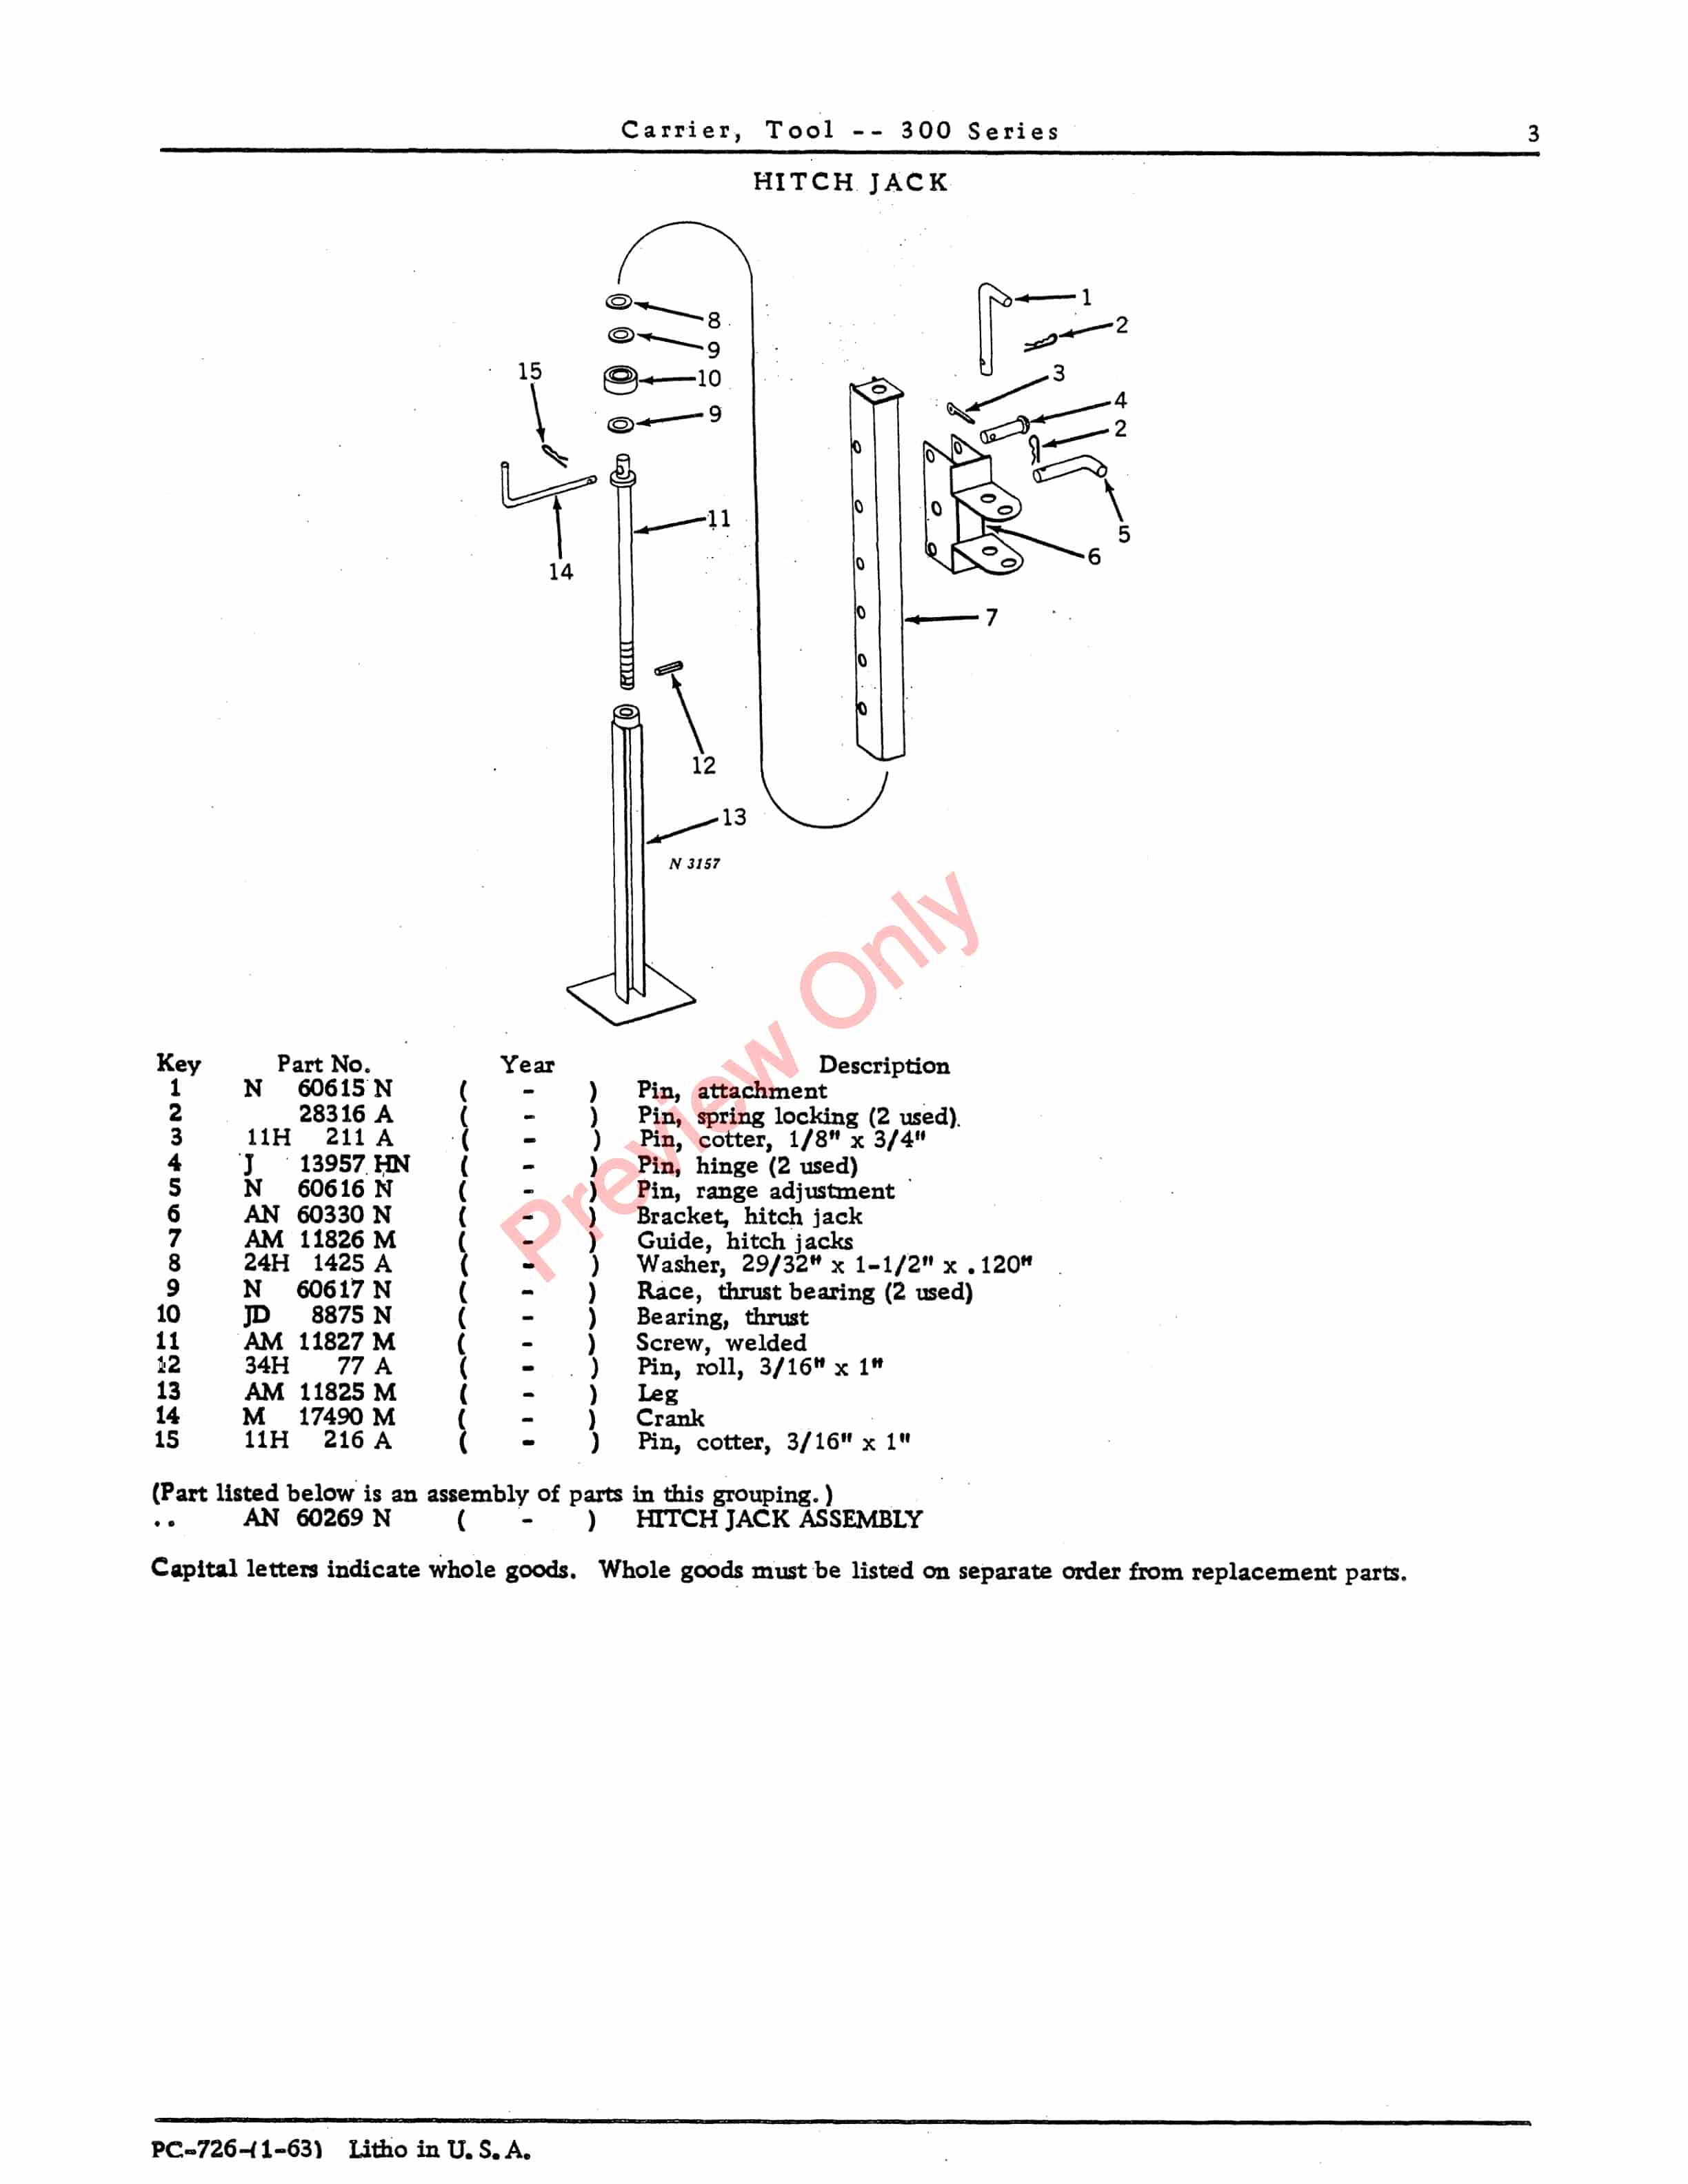 John Deere Tool Carrier – 300 Series Parts Catalog PC726 01JAN63-5